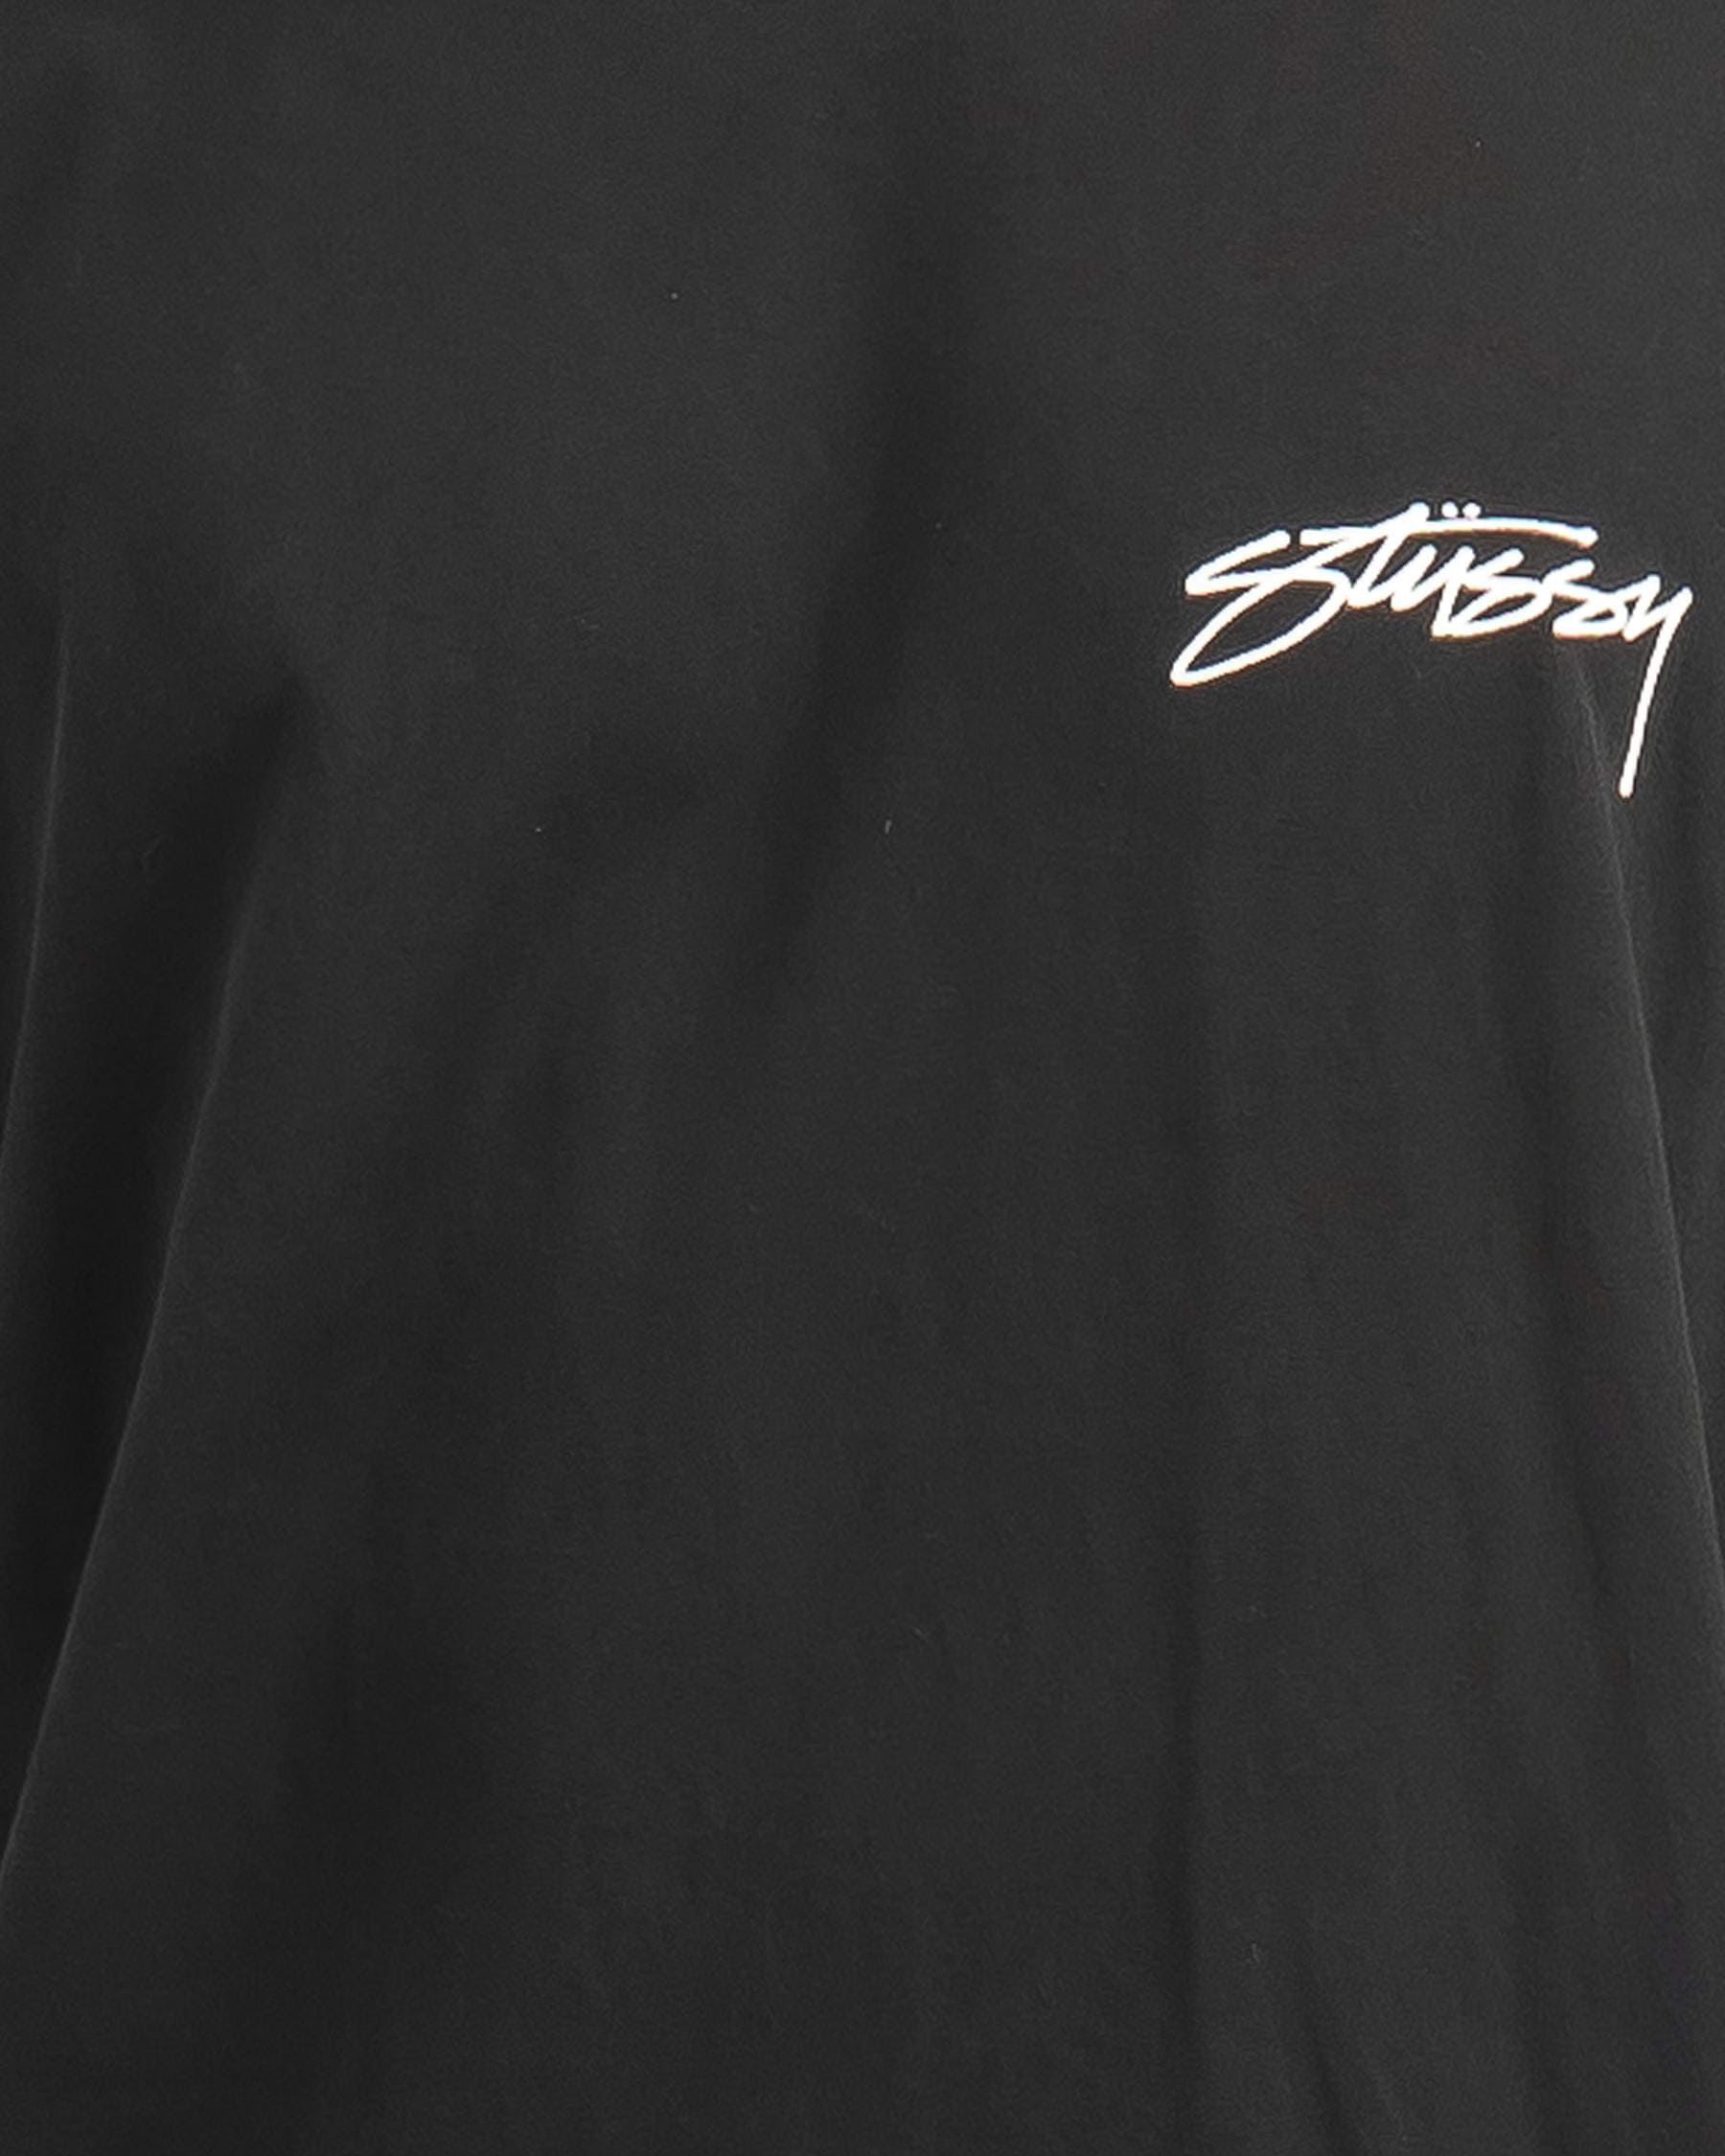 Shop Stussy Pigment Stussy Designs T-Shirt In Pigment Black - Fast ...